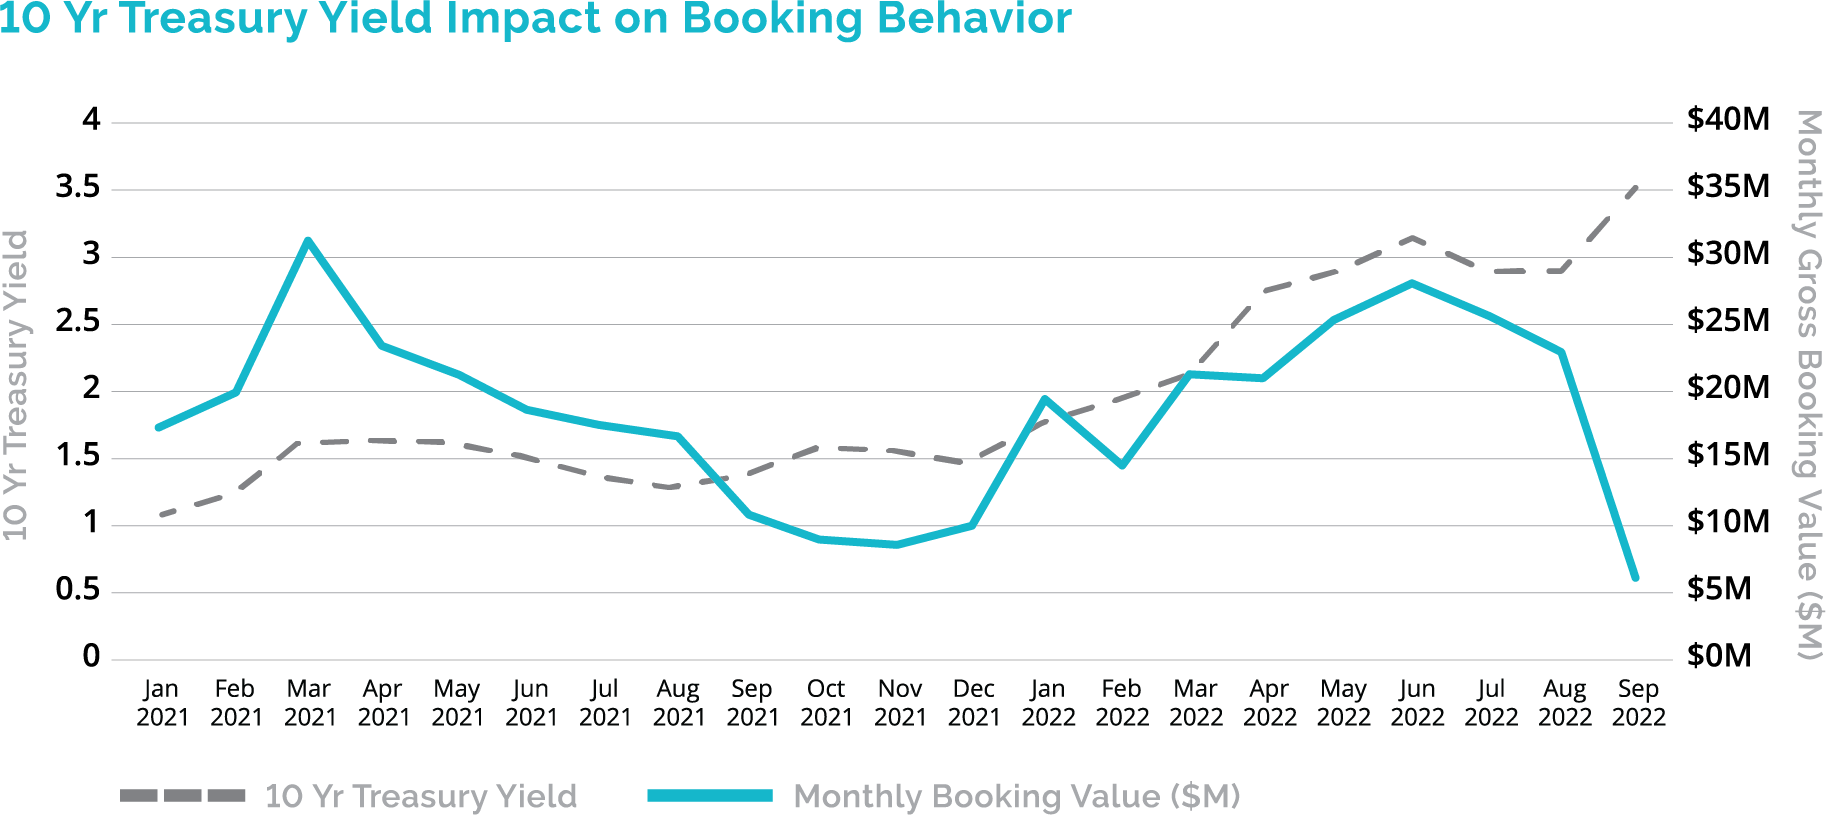 10 Yr Treasury Yield Impact on Booking Behavior